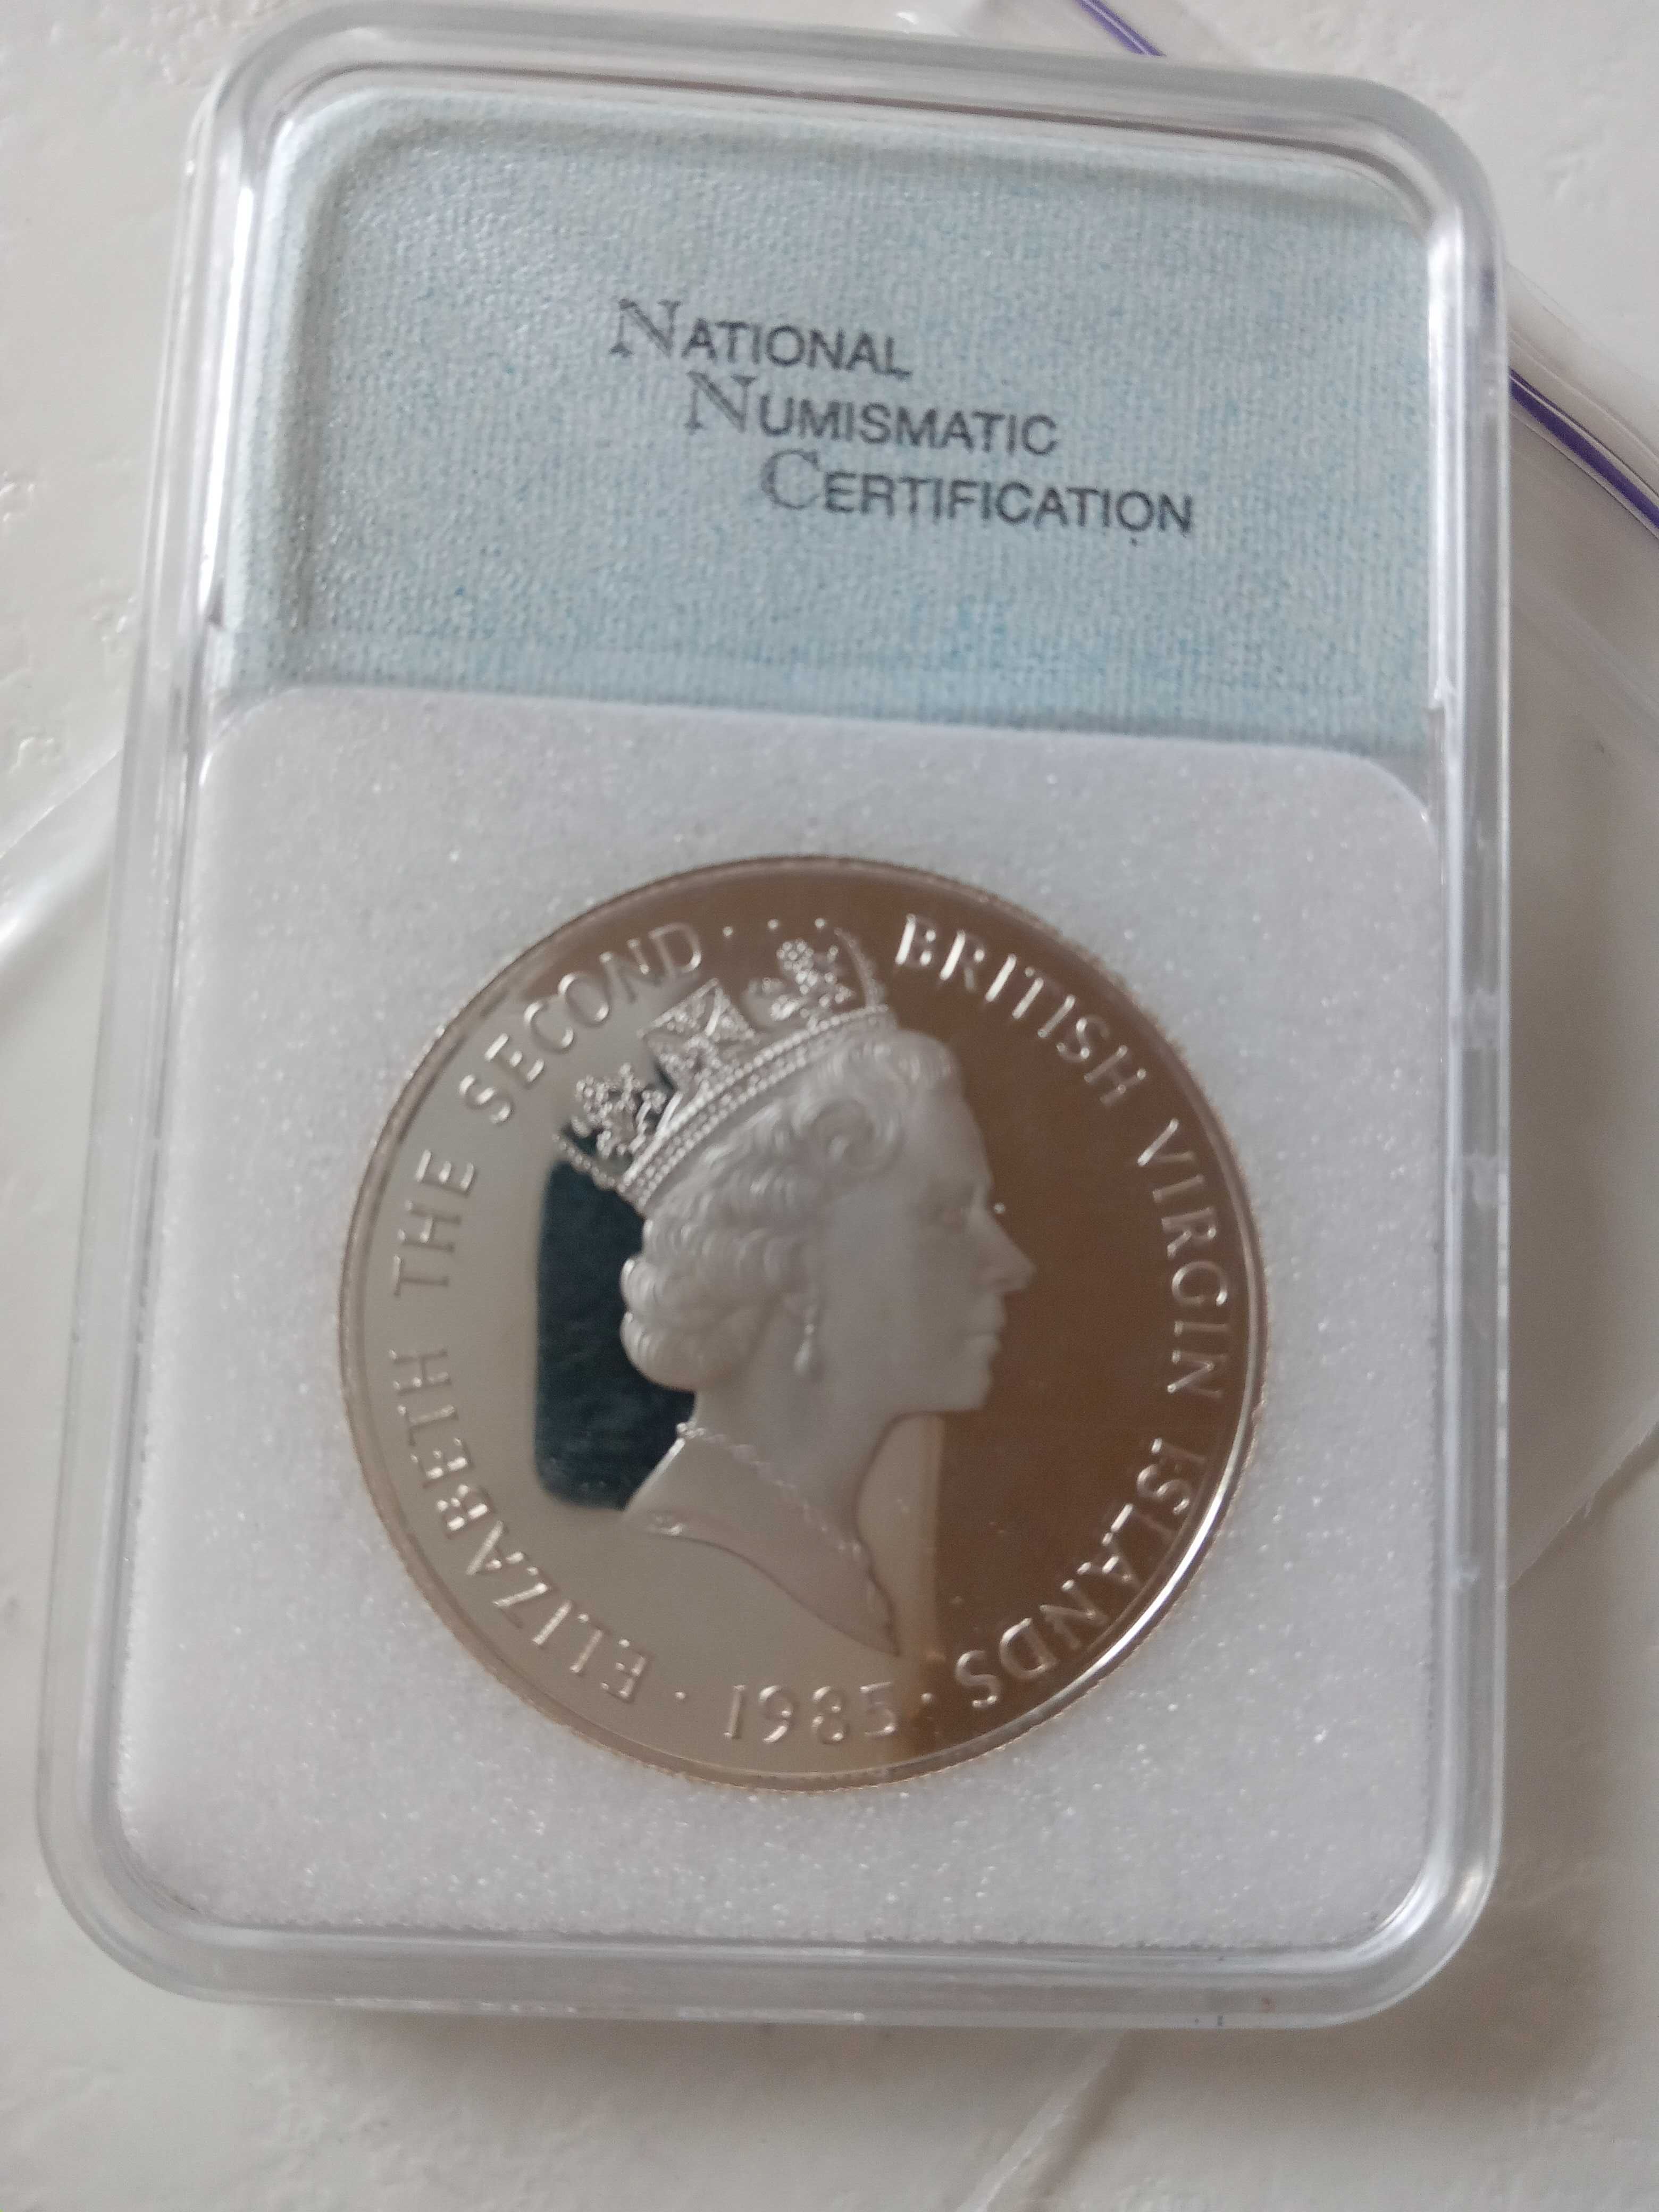 монета серебро British Virgin Islands 20 Dollars 1985 Silver